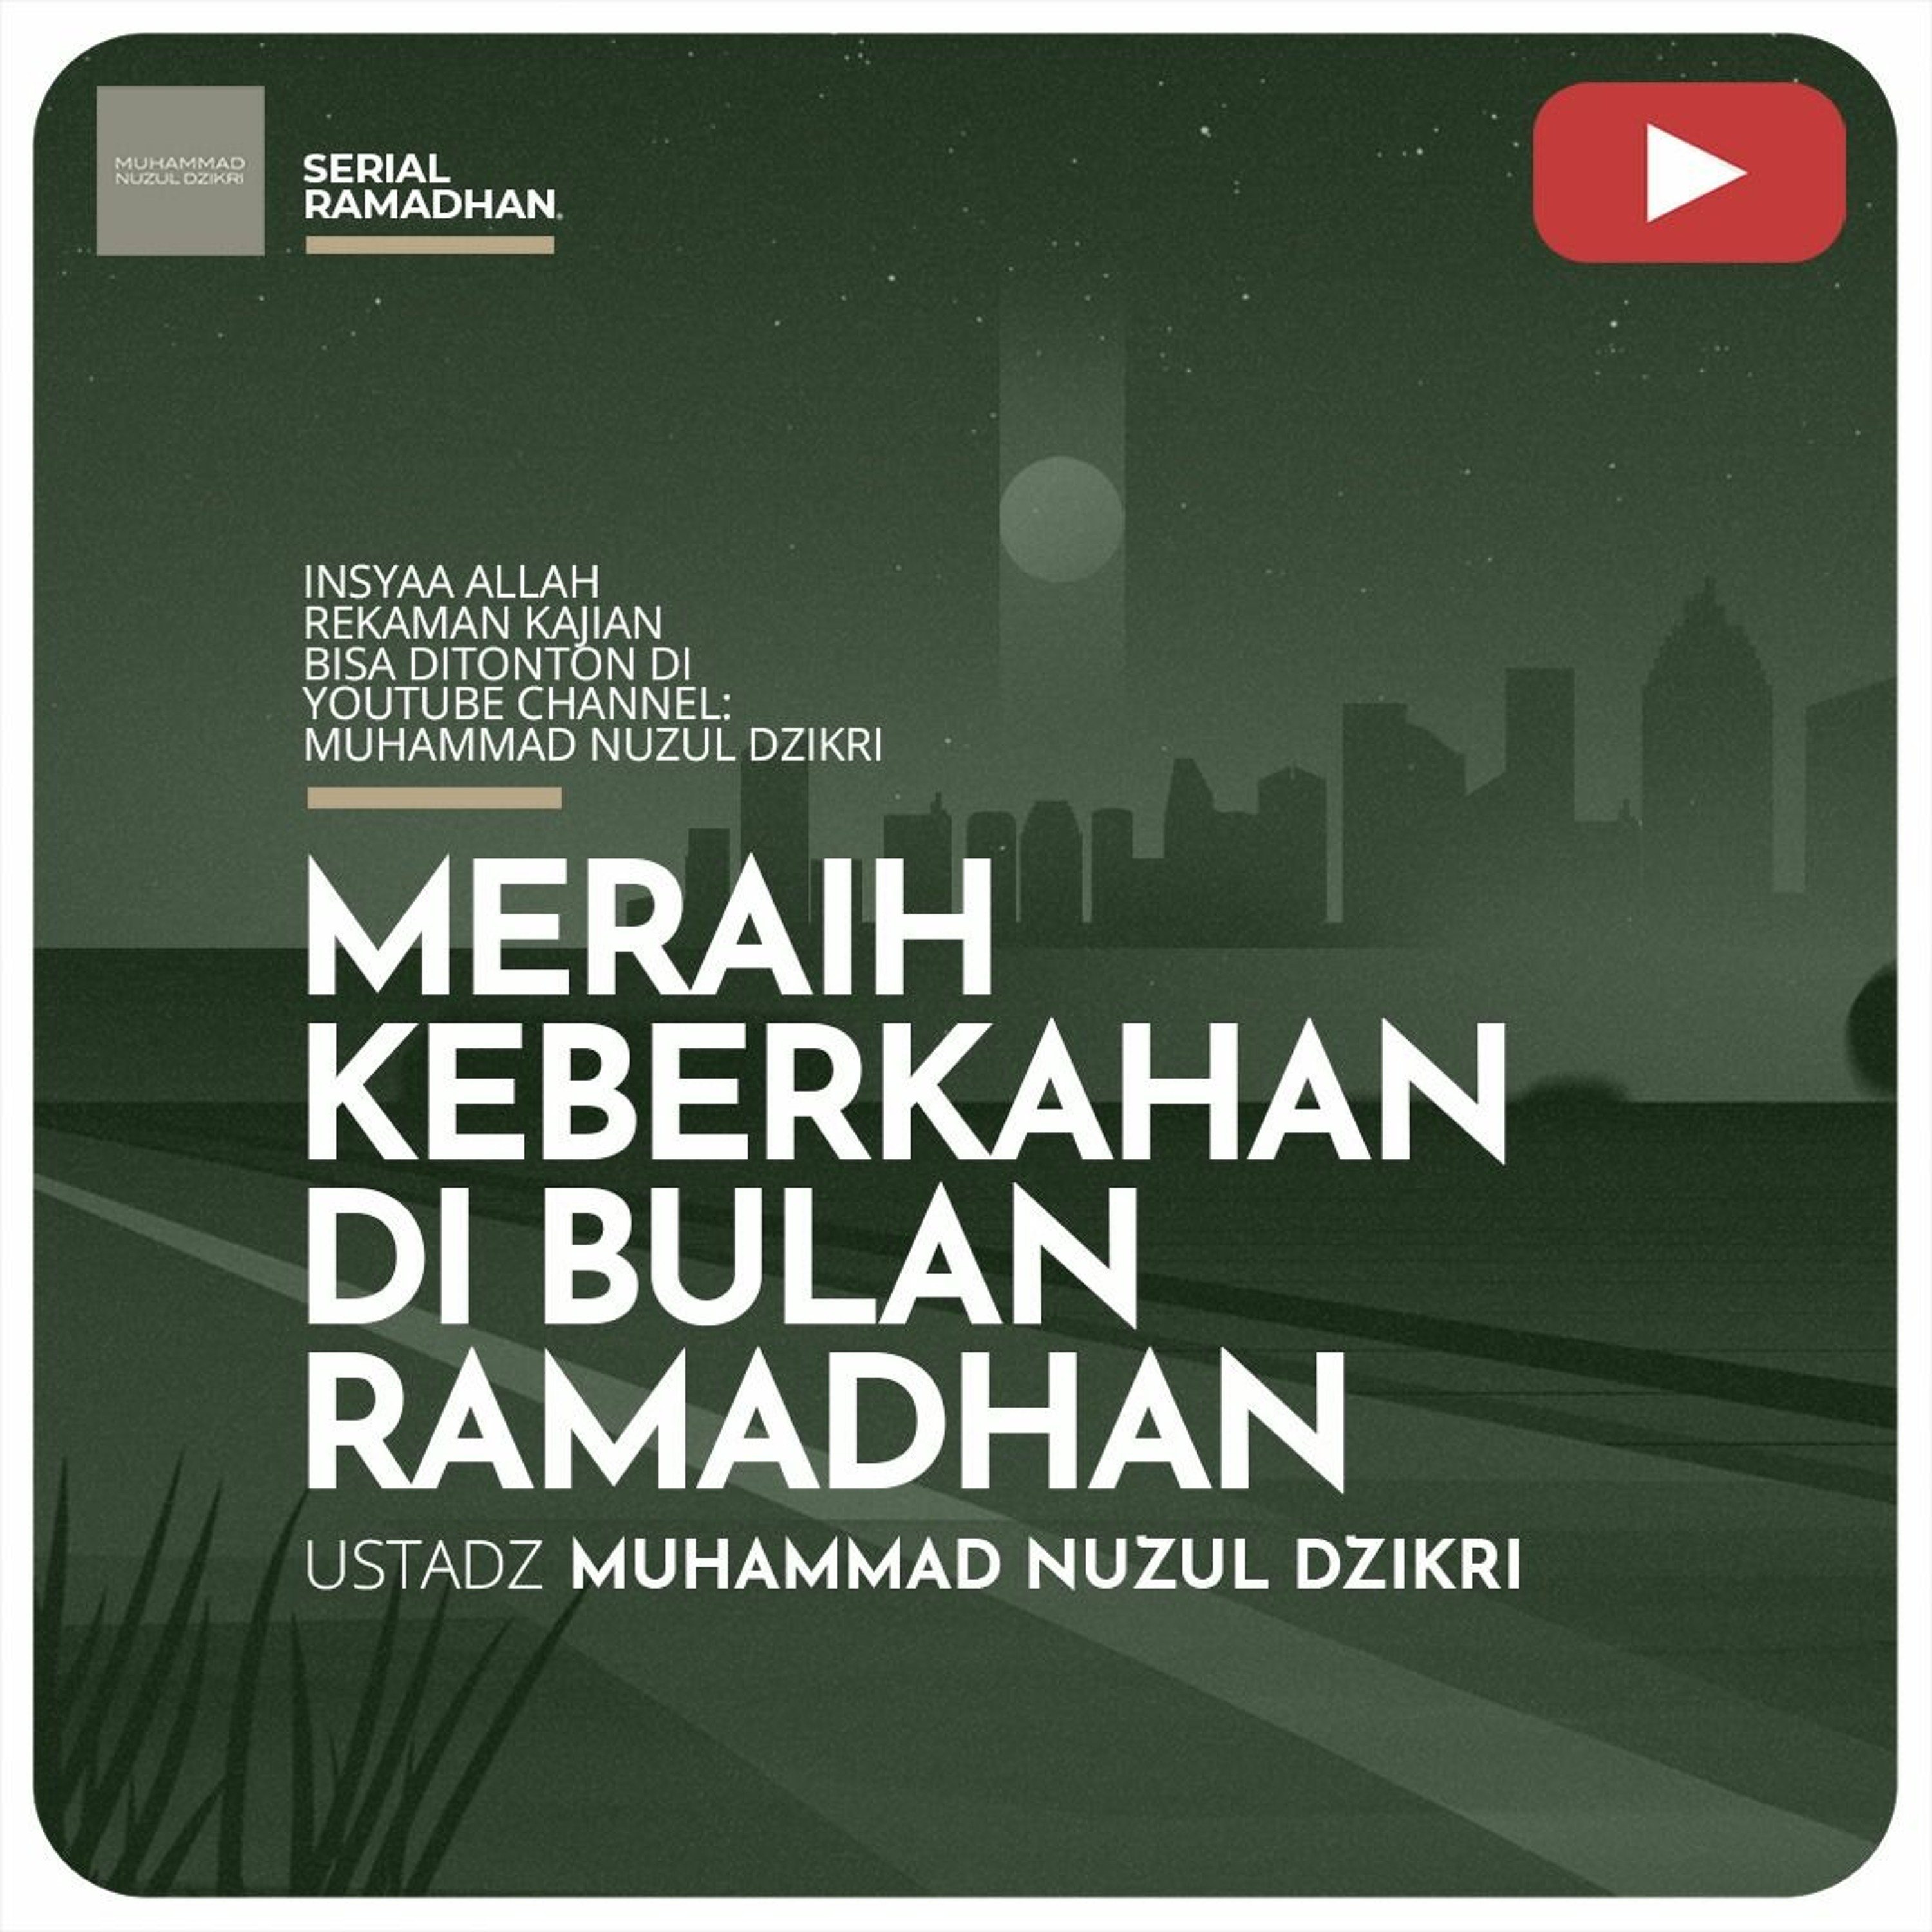 Serial Ramadhan 11. ”MERAIH KEBERKAHAN DI BULAN RAMADHAN” - Ustadz Muhammad Nuzul Dzikri